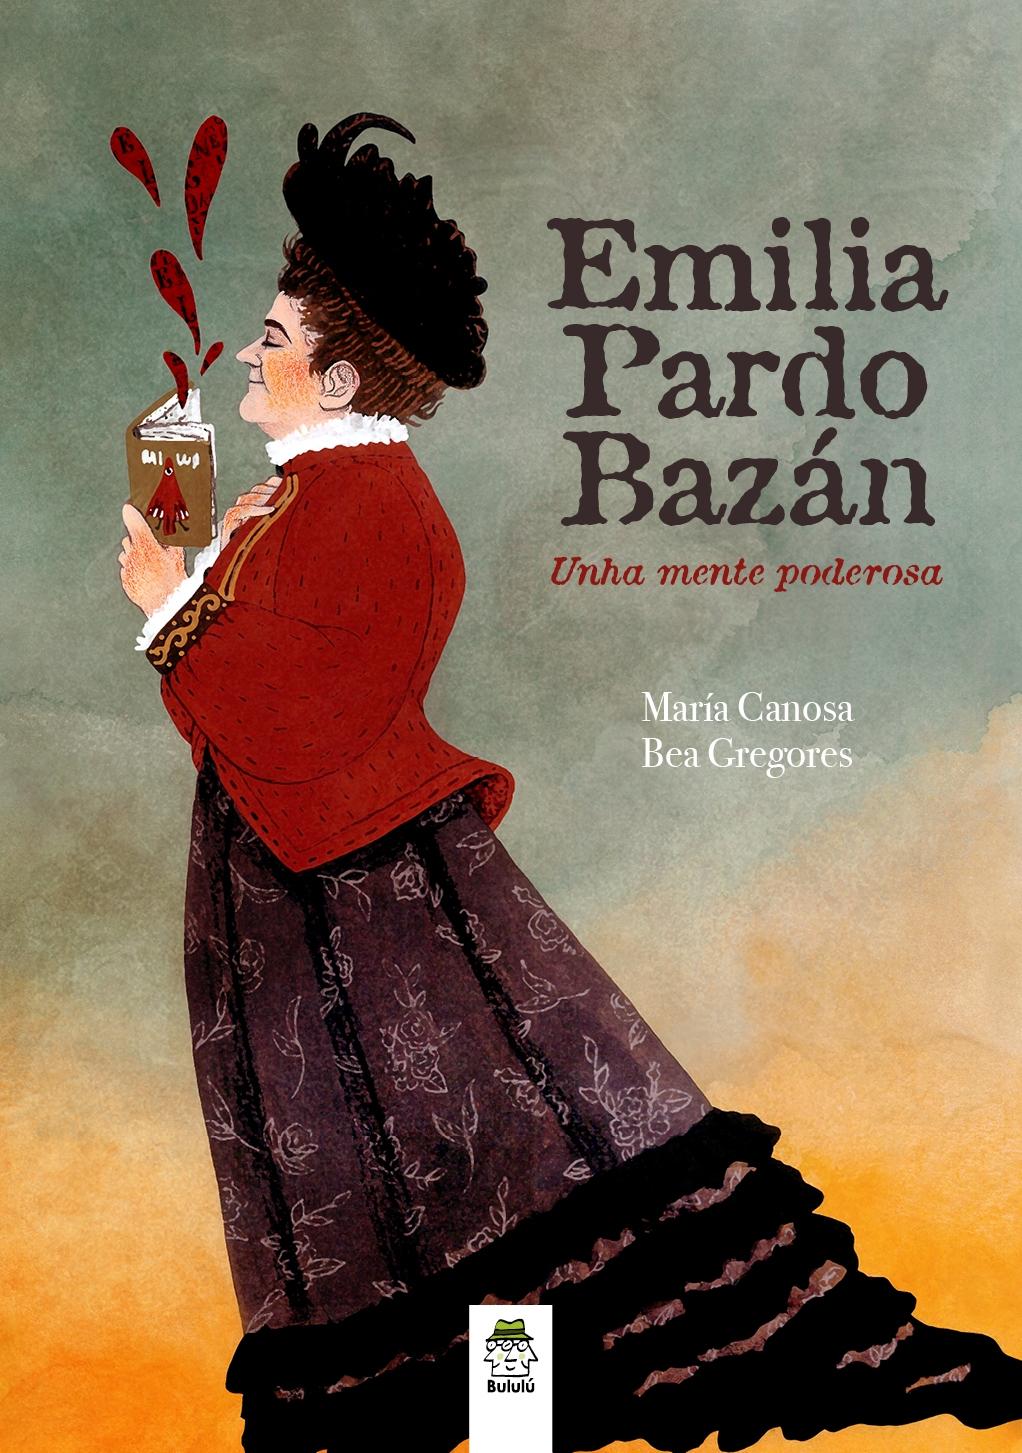 Emilia Pardo Bazan "Una mente poderosa". 